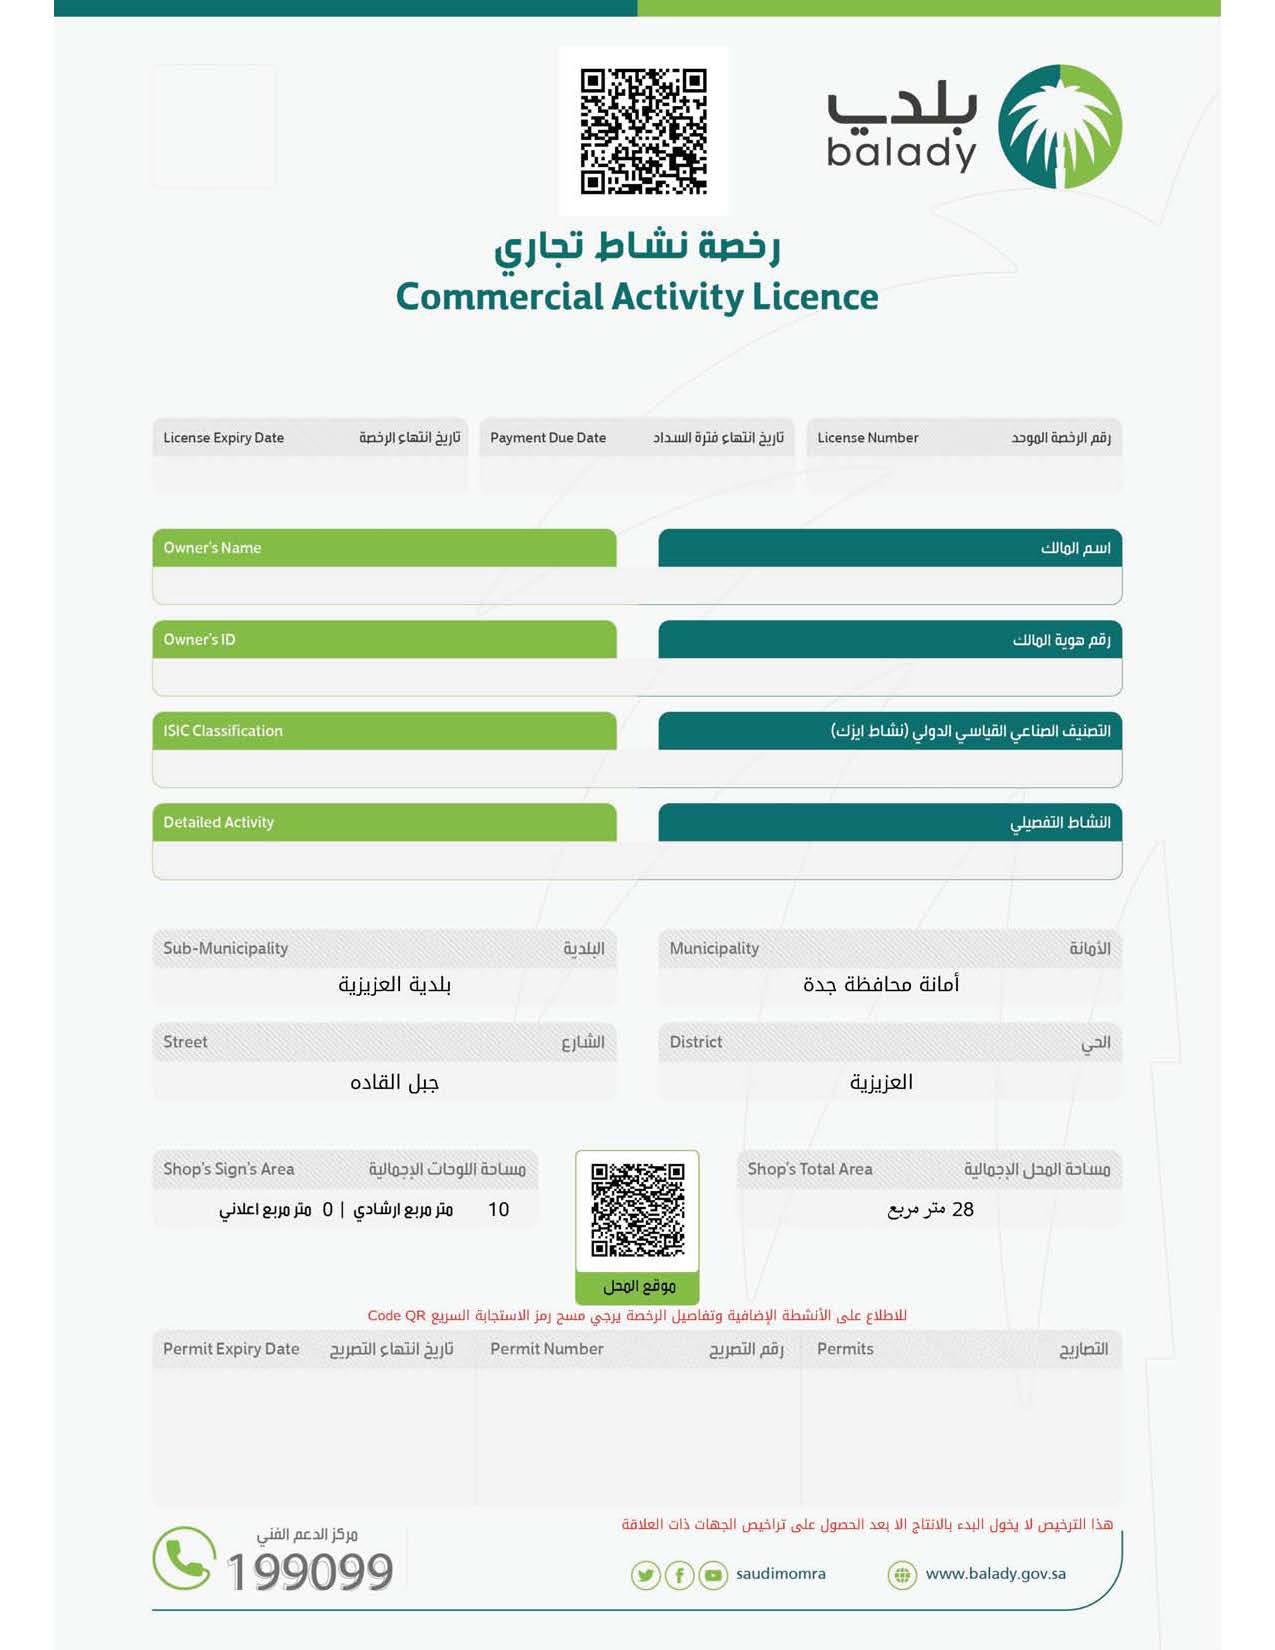 البلديات Page 21 One of the leading companies and a significant number in all its fields